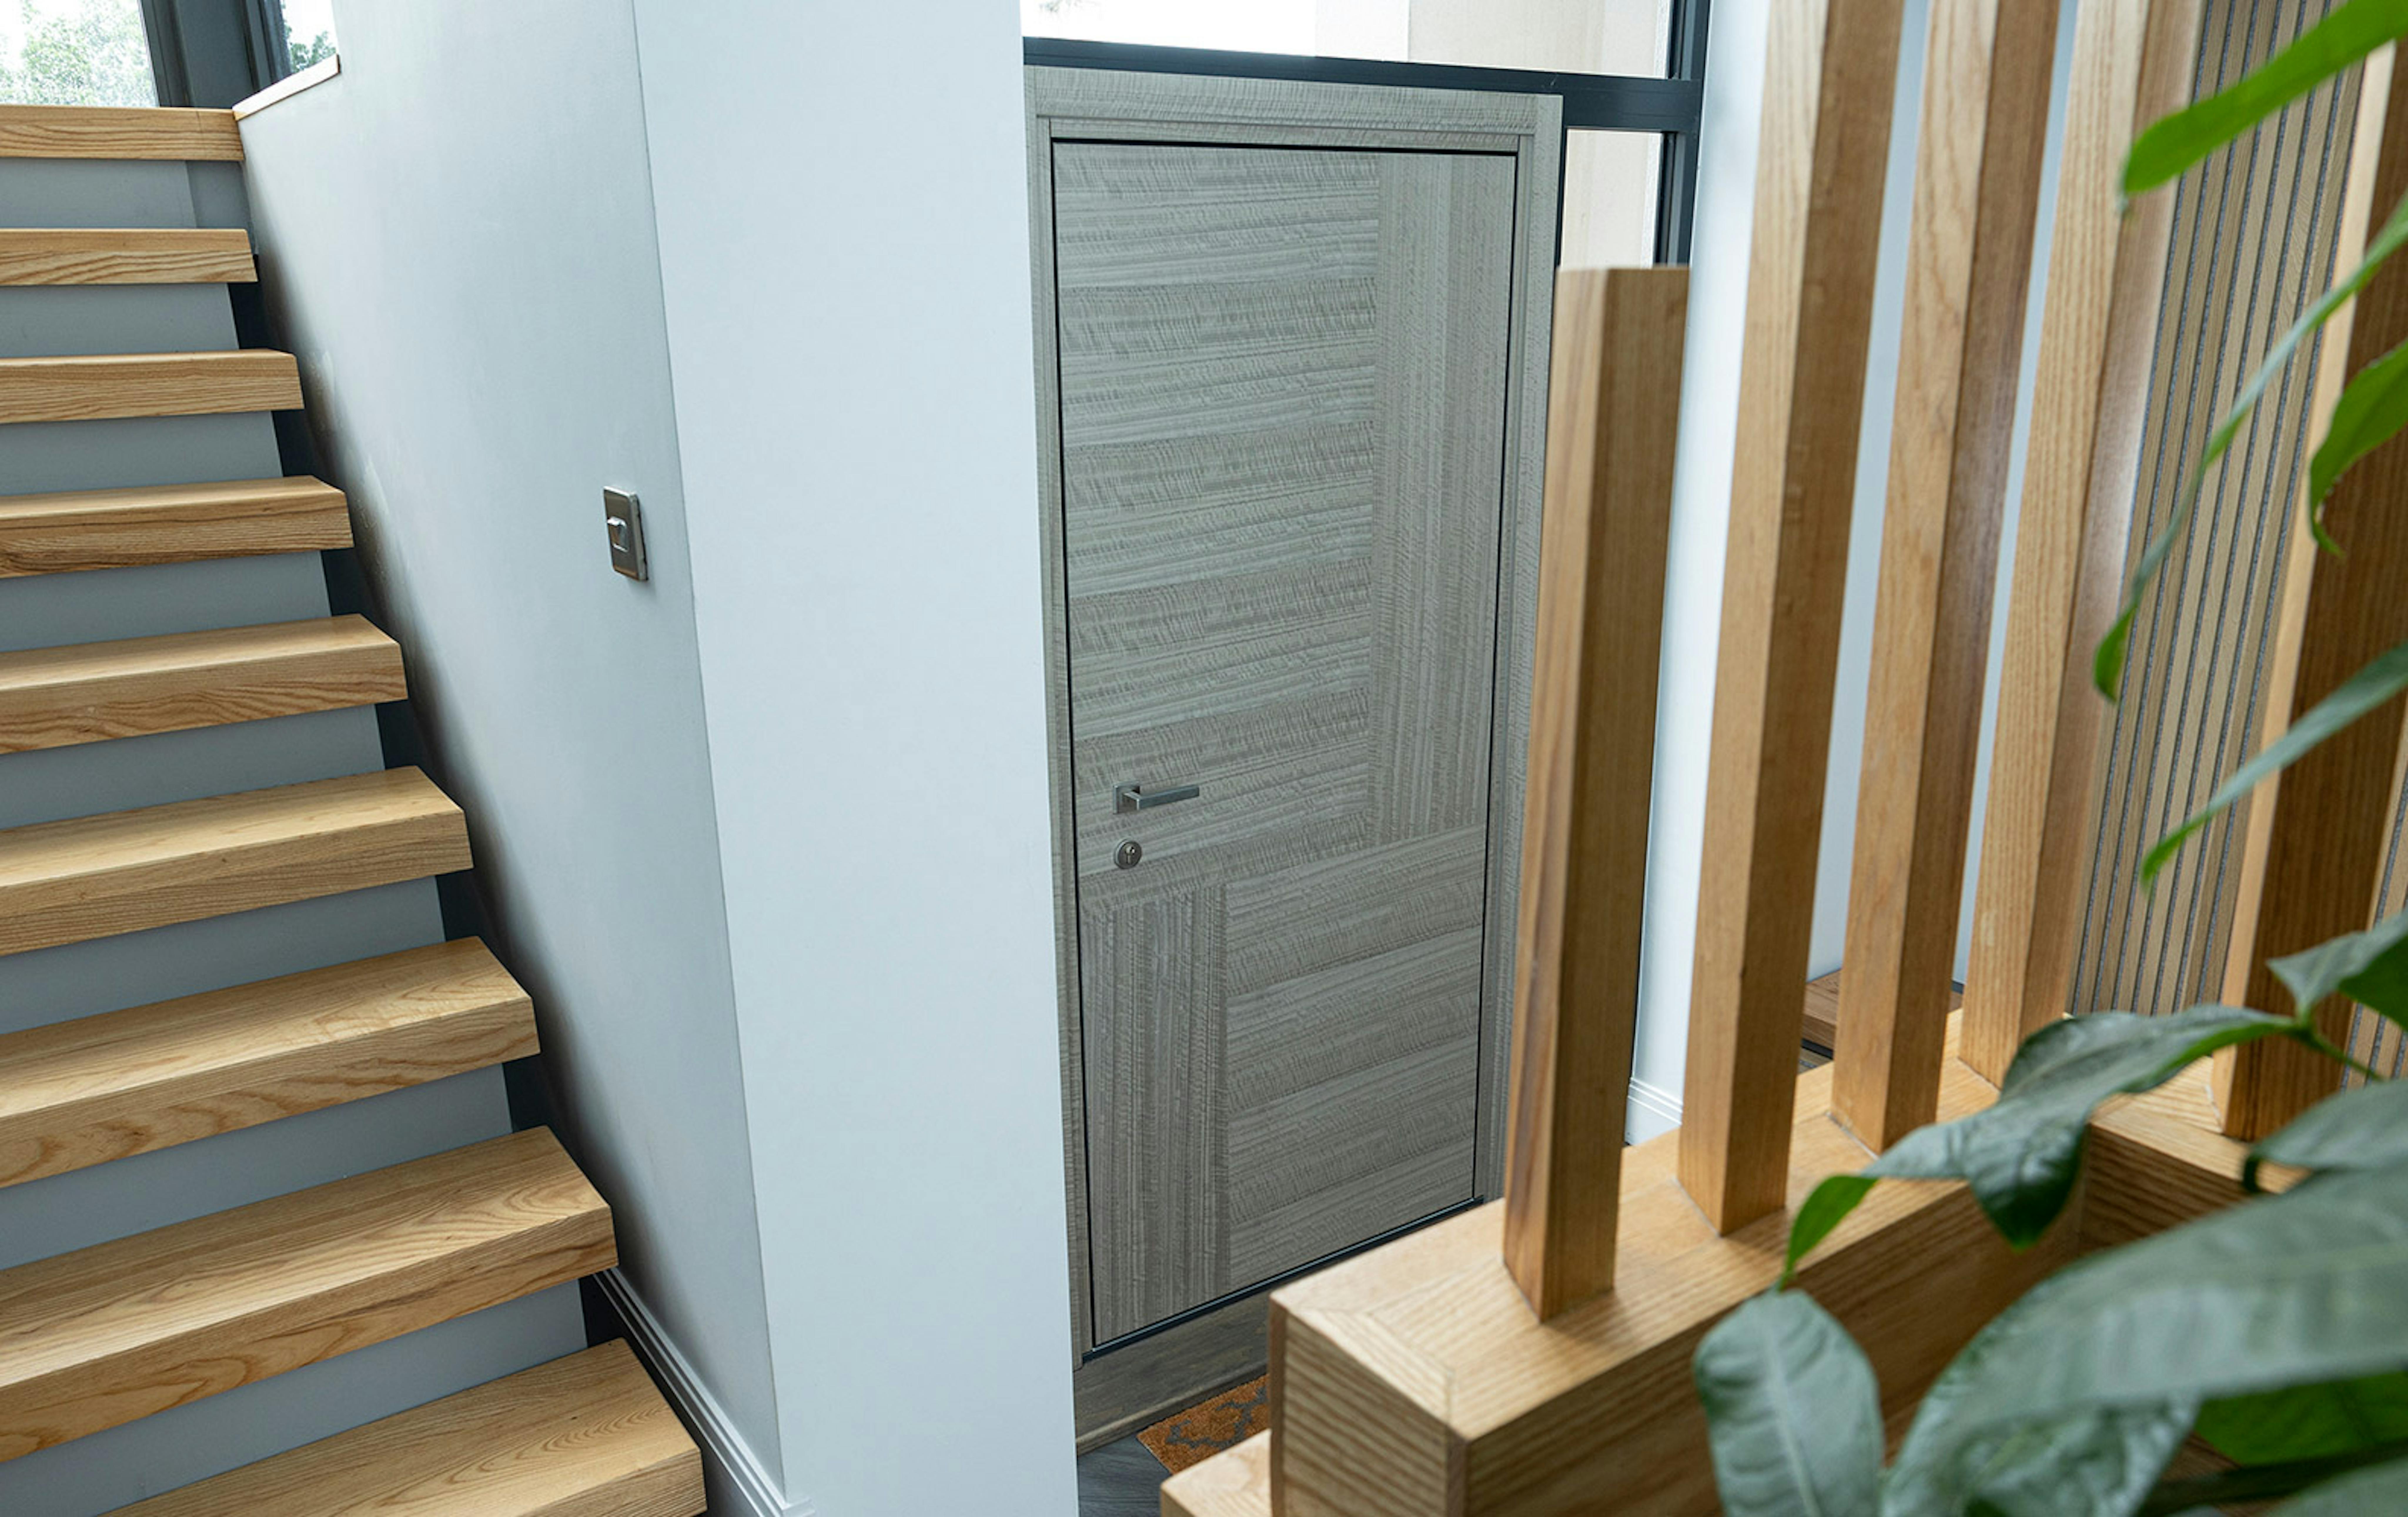 A contemporary internal door by Deuren - Vario 4 style, Eucalyptus (grey grain) finish with chrome lever handle. Set in a contemporary hallway